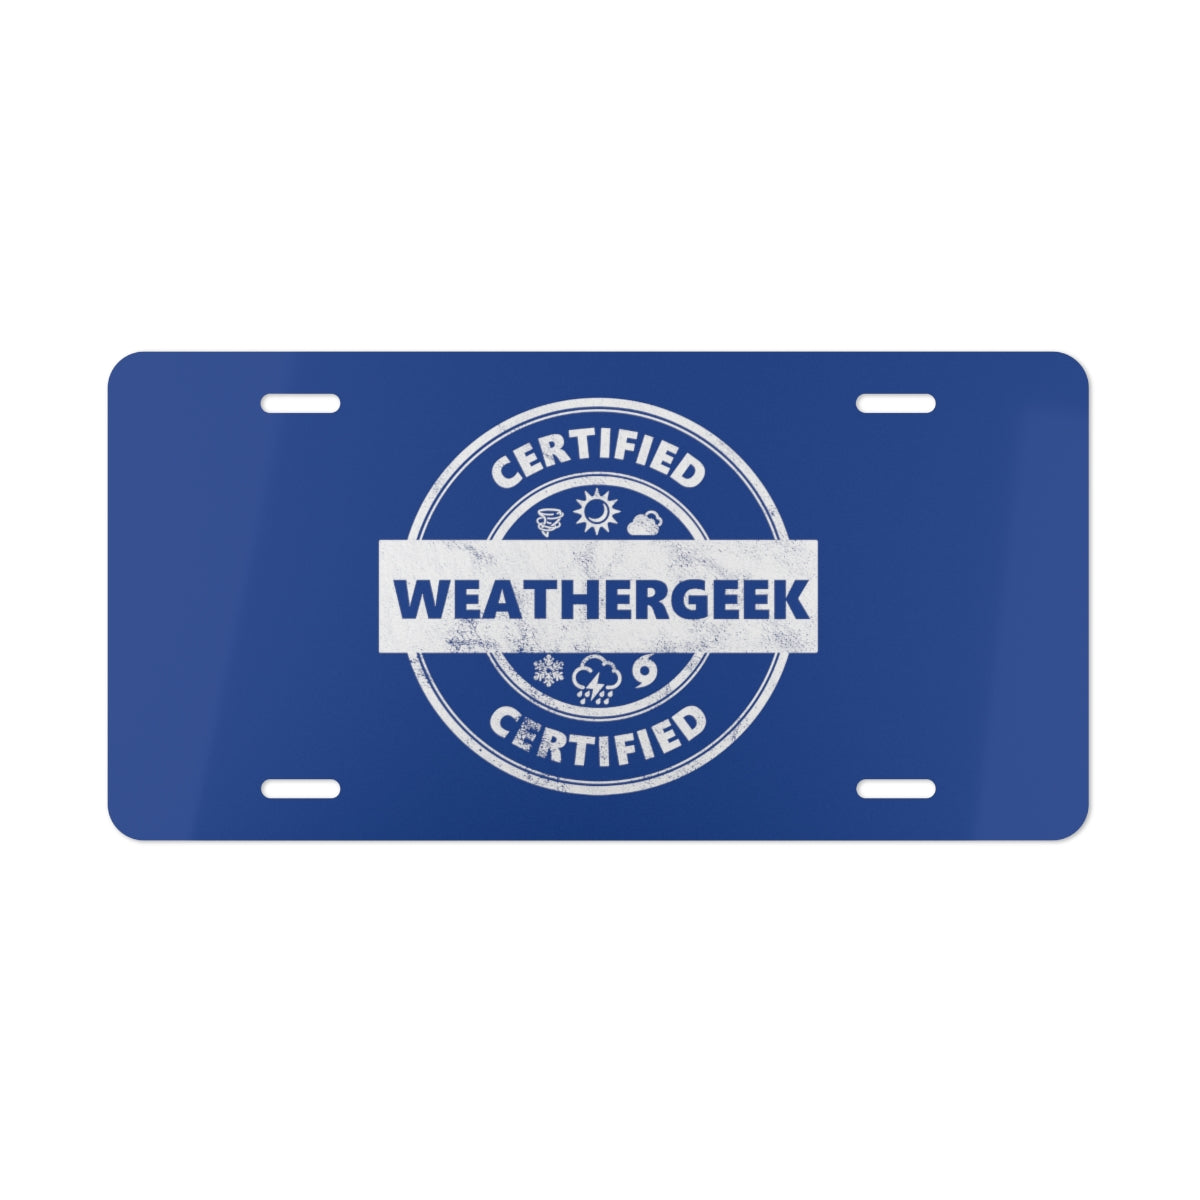 Matrícula certificada de Weathergeek 